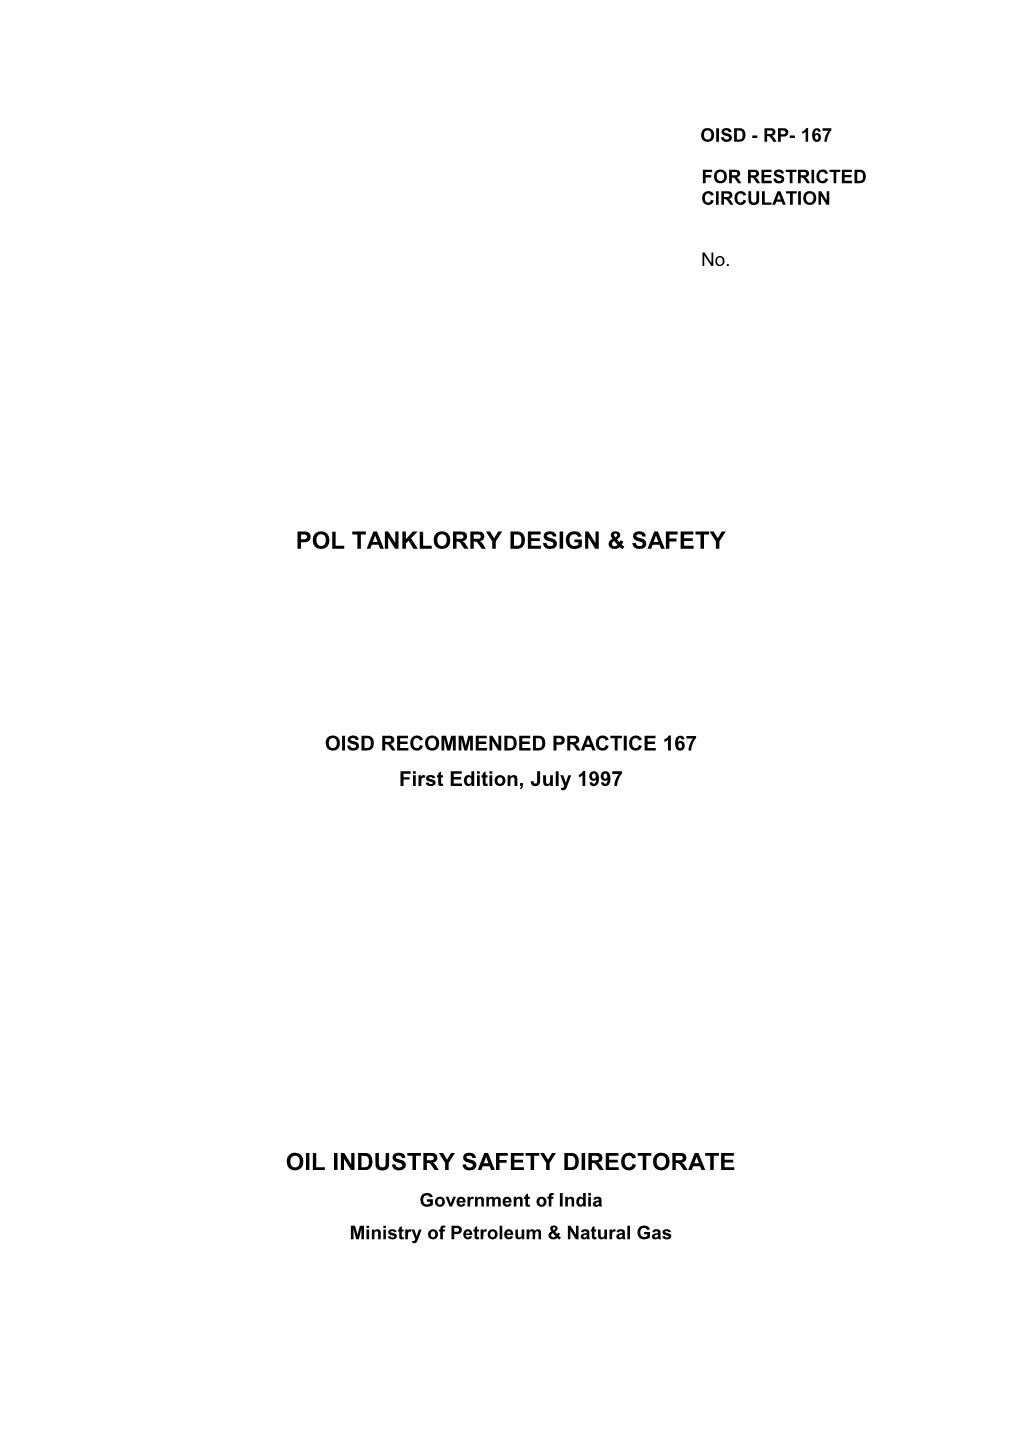 Pol Tanklorry Design & Safety